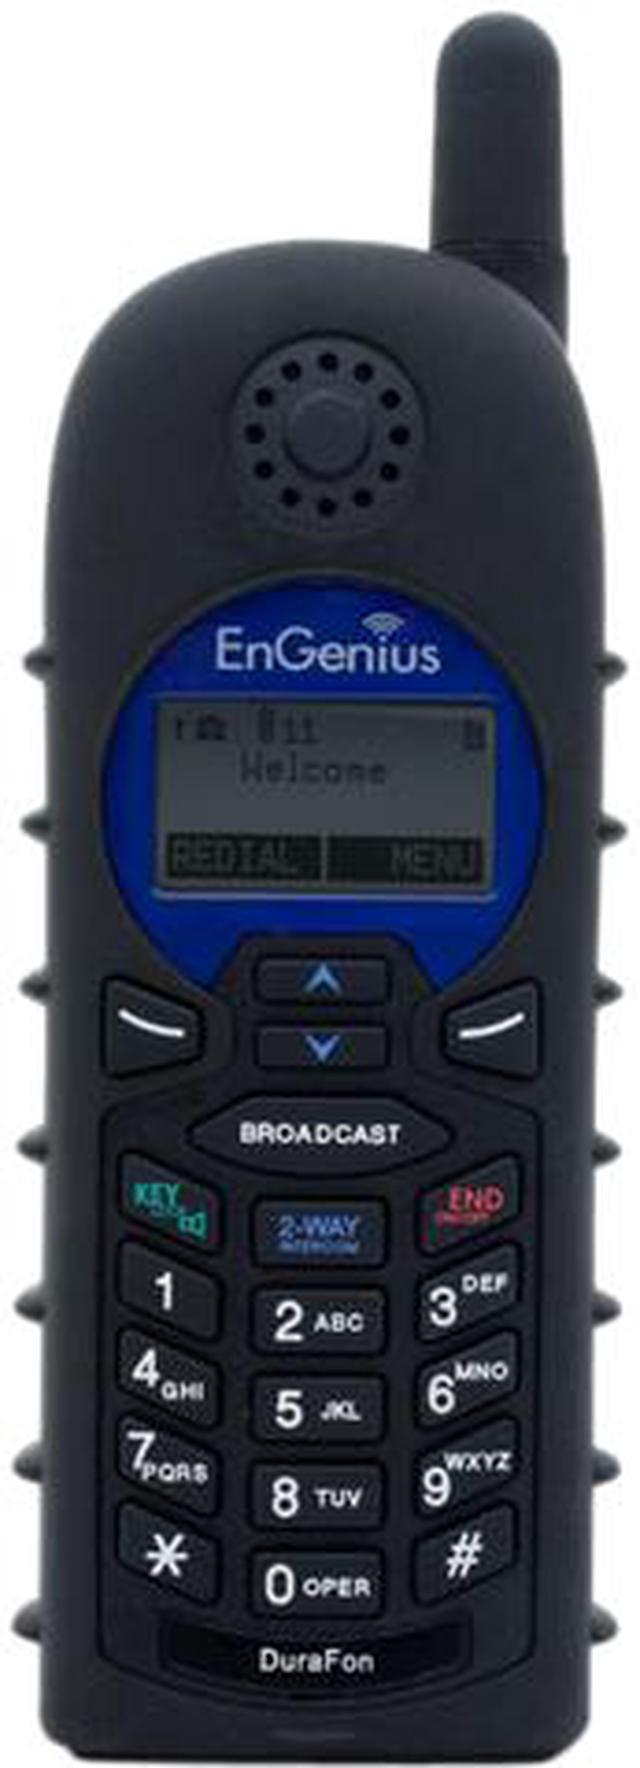 EnGenius DURAWALKIE 1X DuraFon 2-Way Radio Walkie Handset